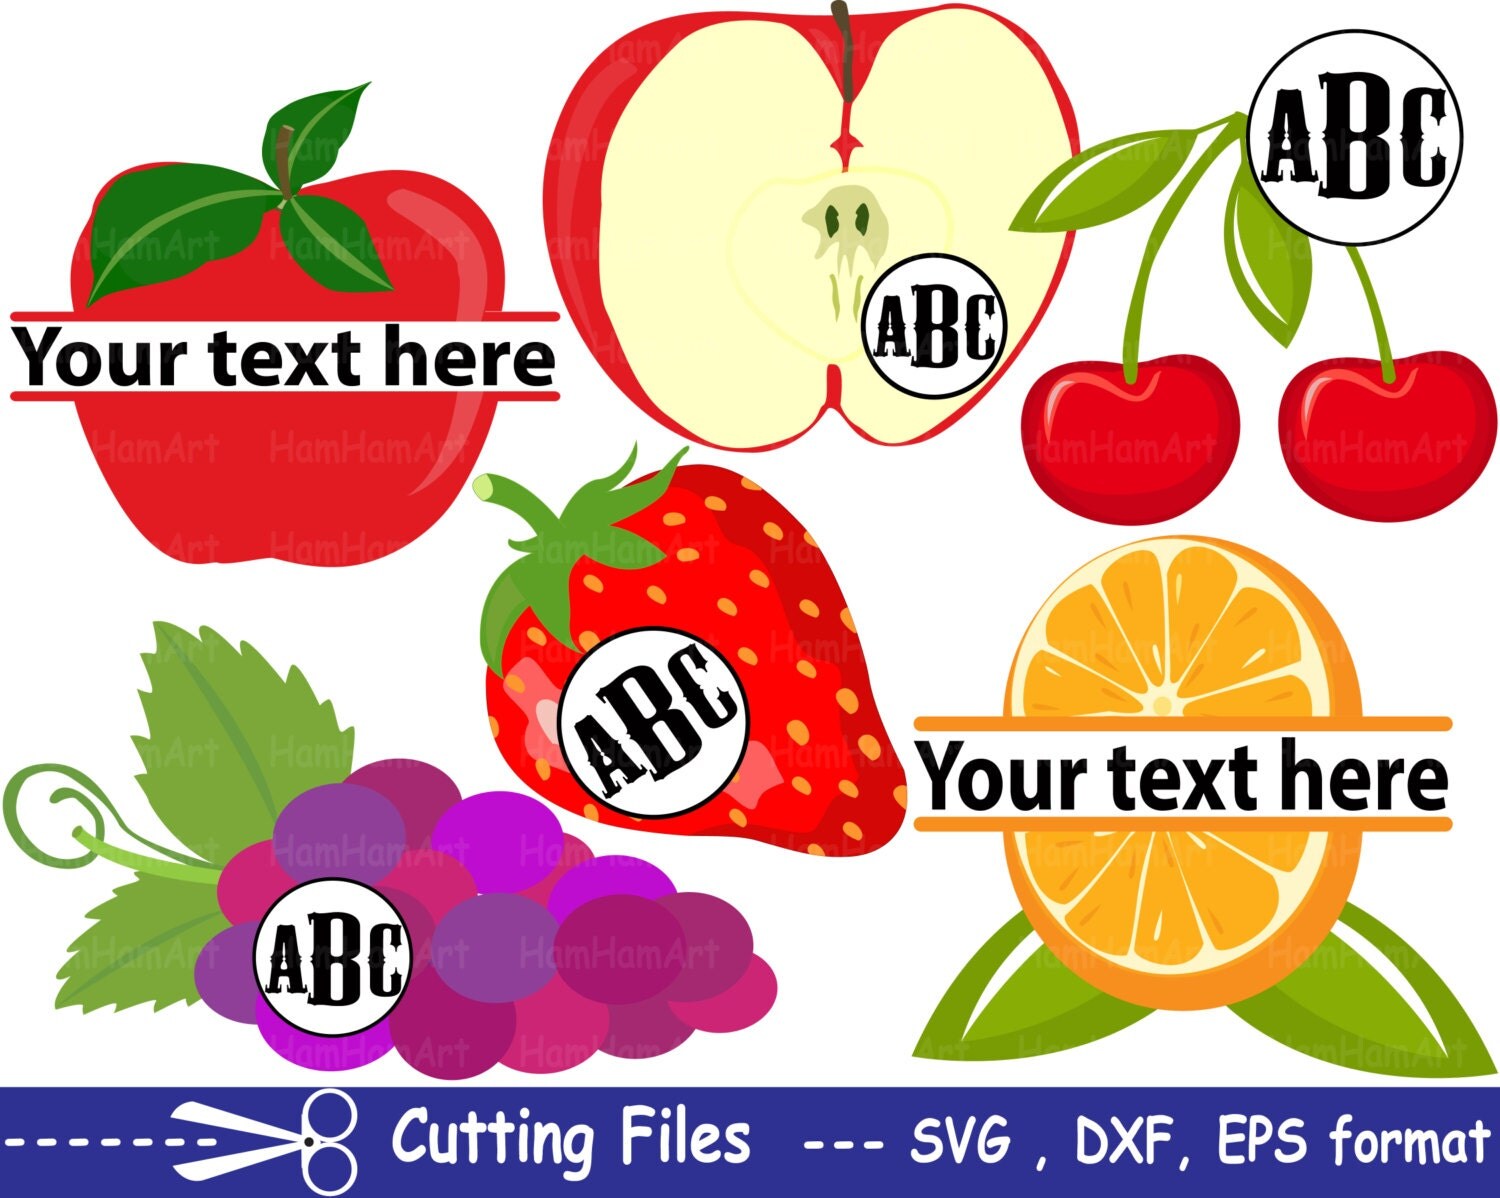 Cutting files SVG DXFEPSpng Fruits items Logo Vinyl